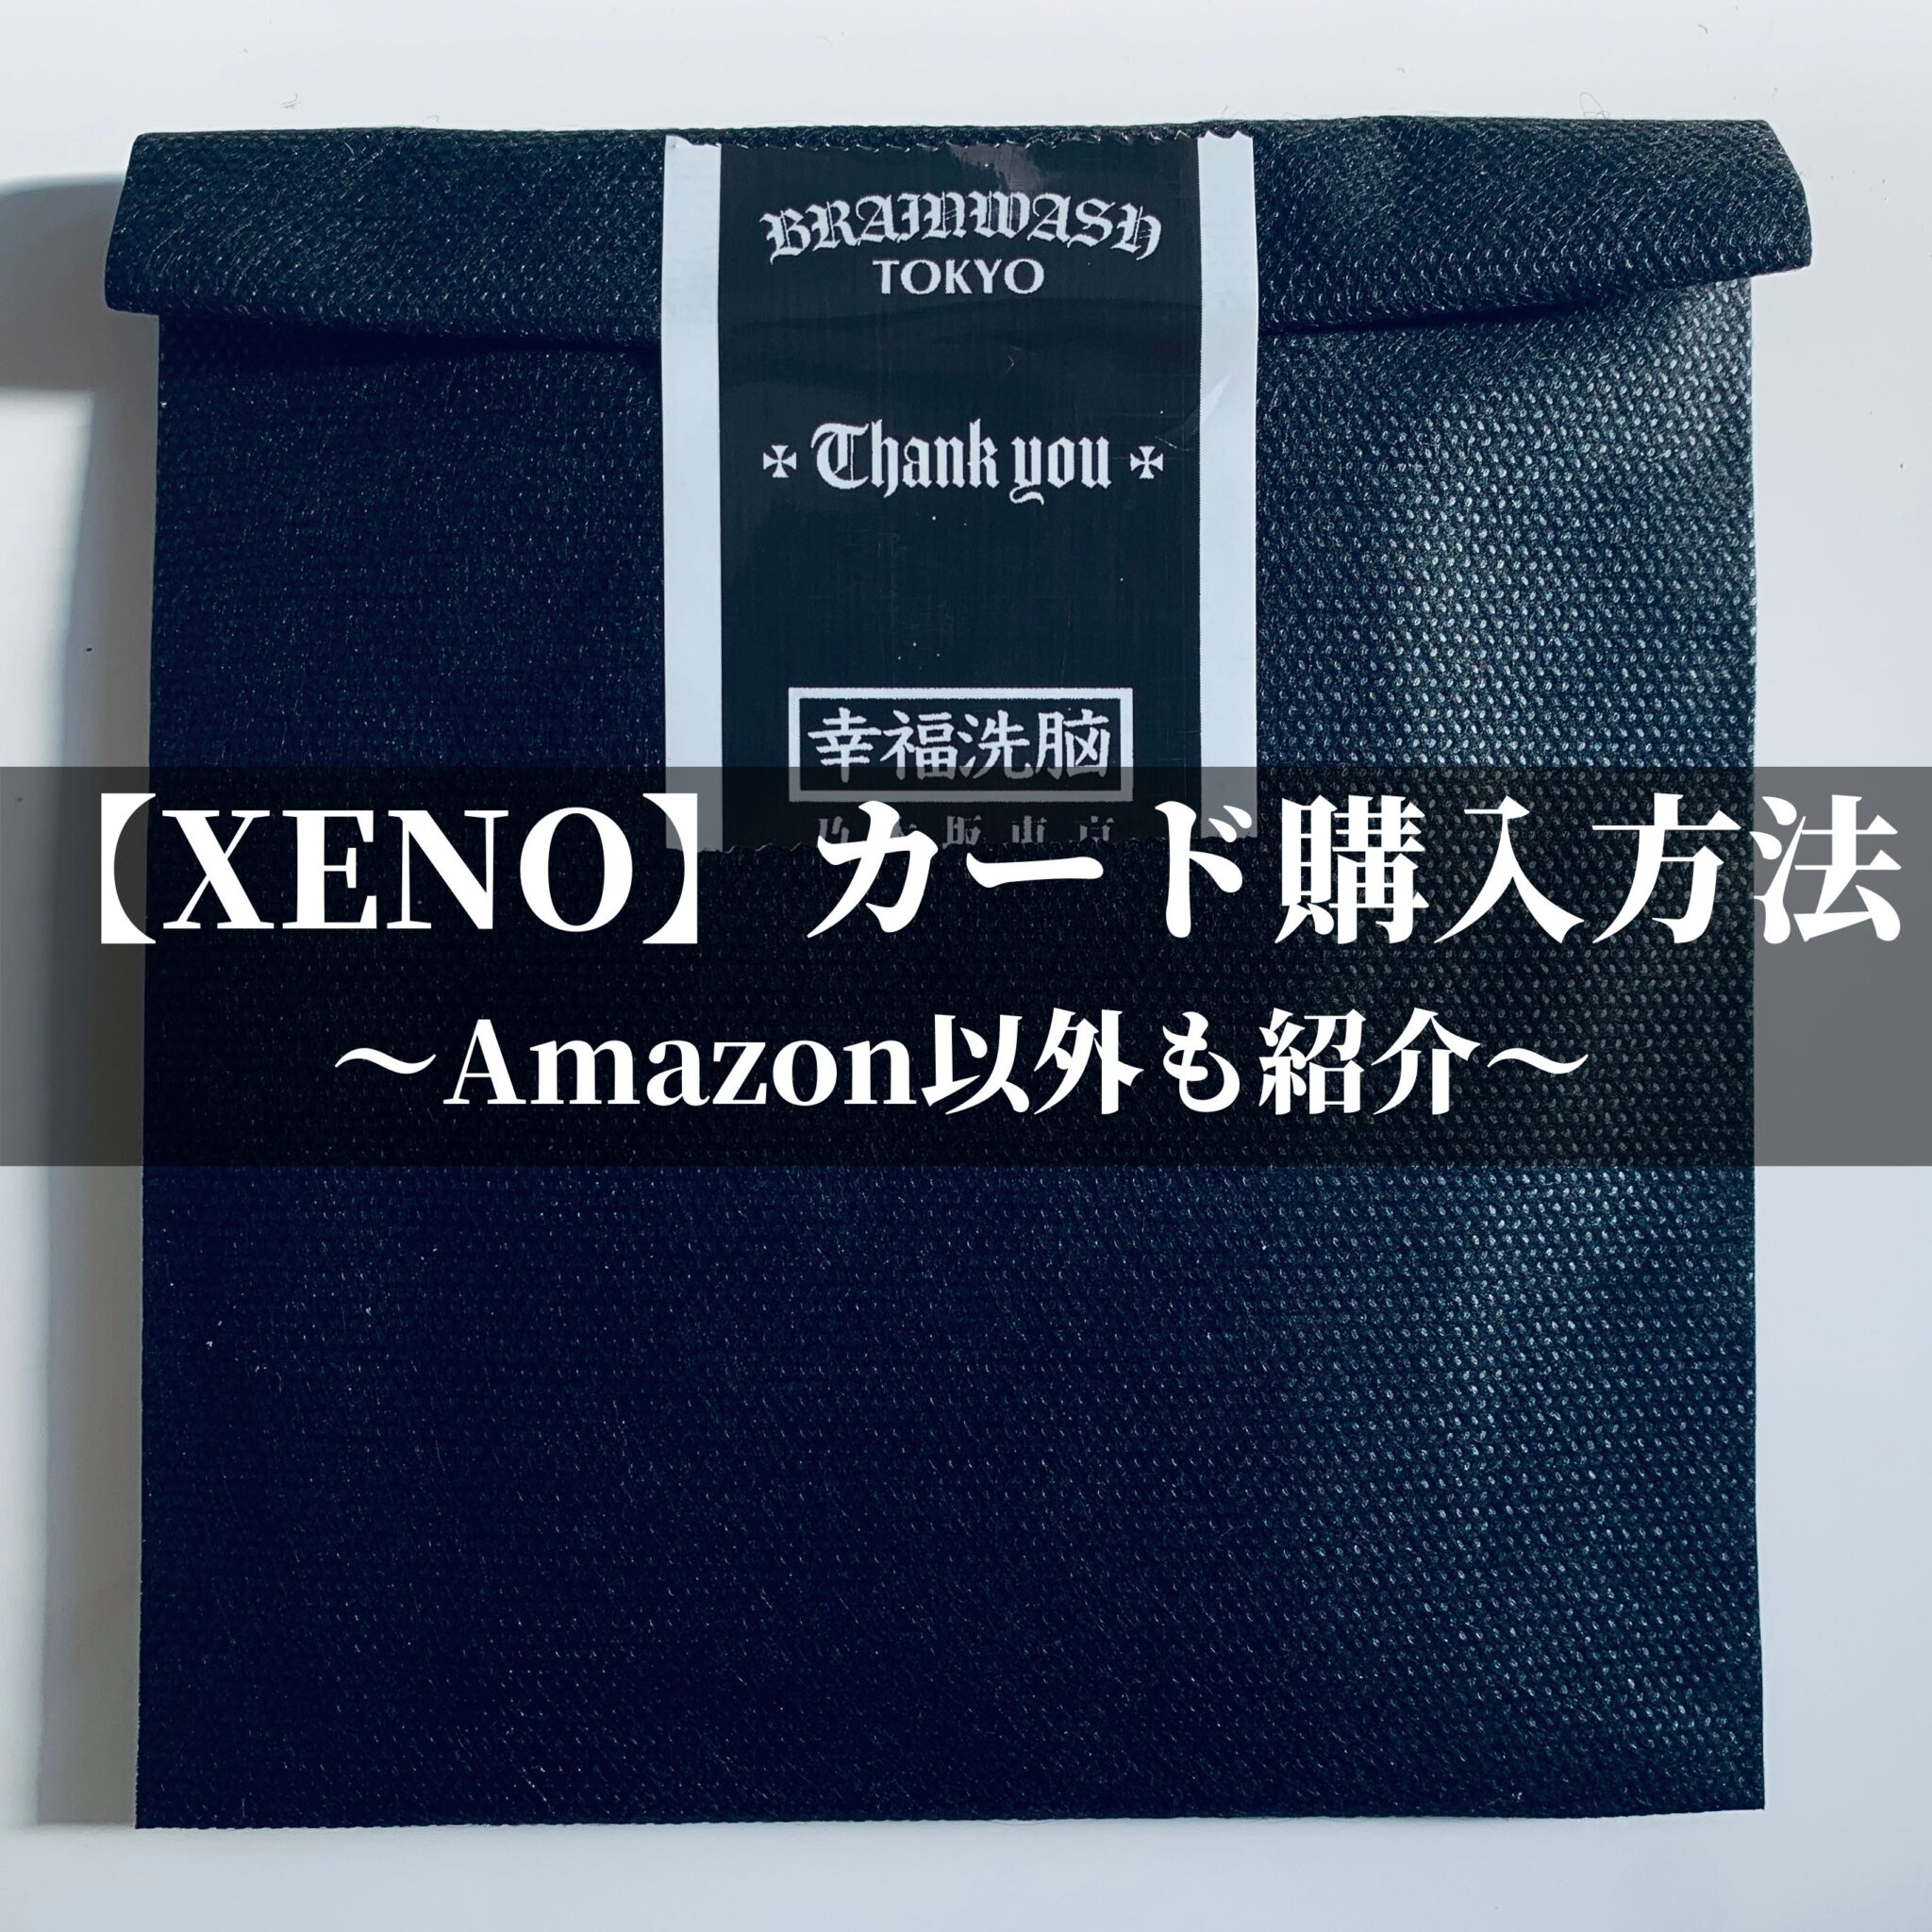 【XENO】カード購入方法〜Amazon以外も紹介〜